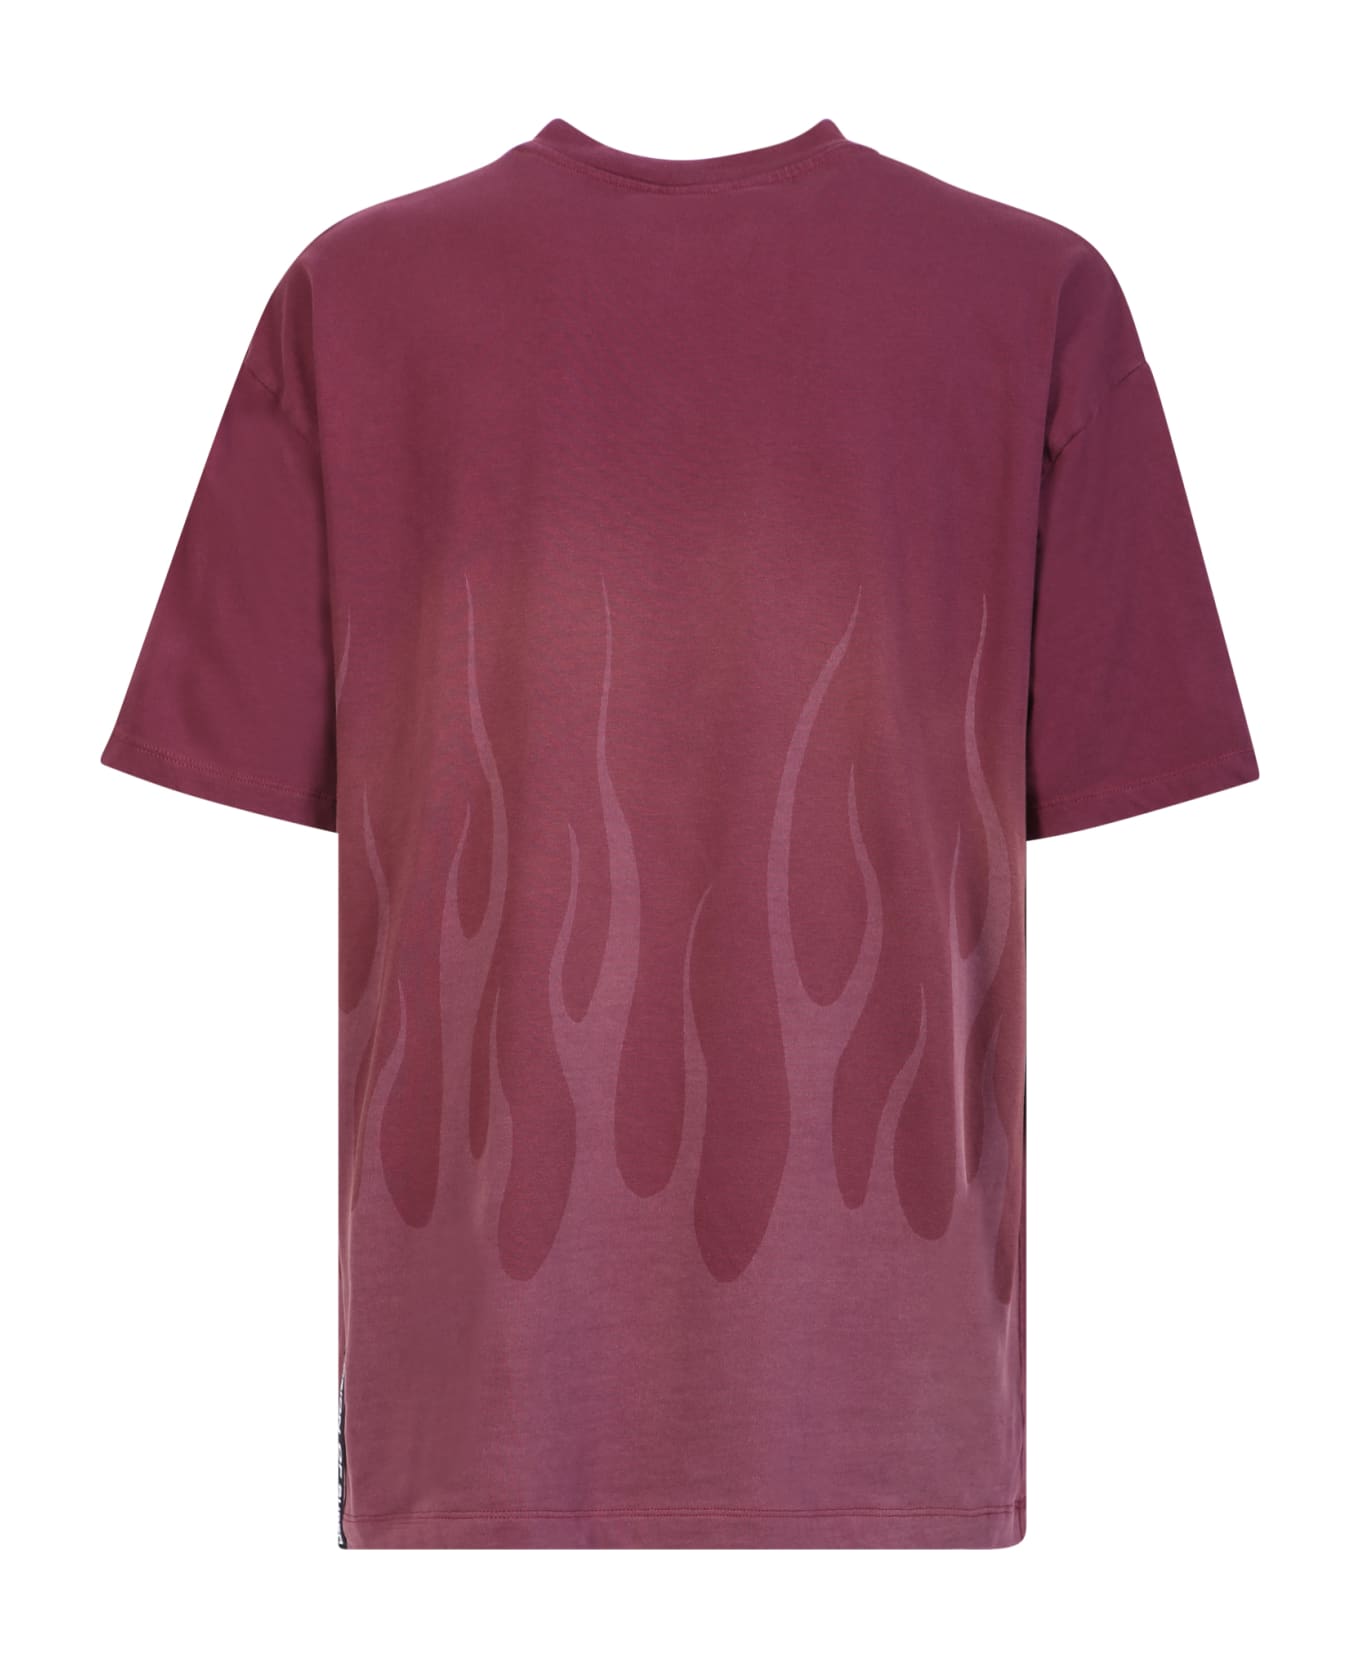 Vision of Super Wine Lasered Flames T-shirt - Bordeaux